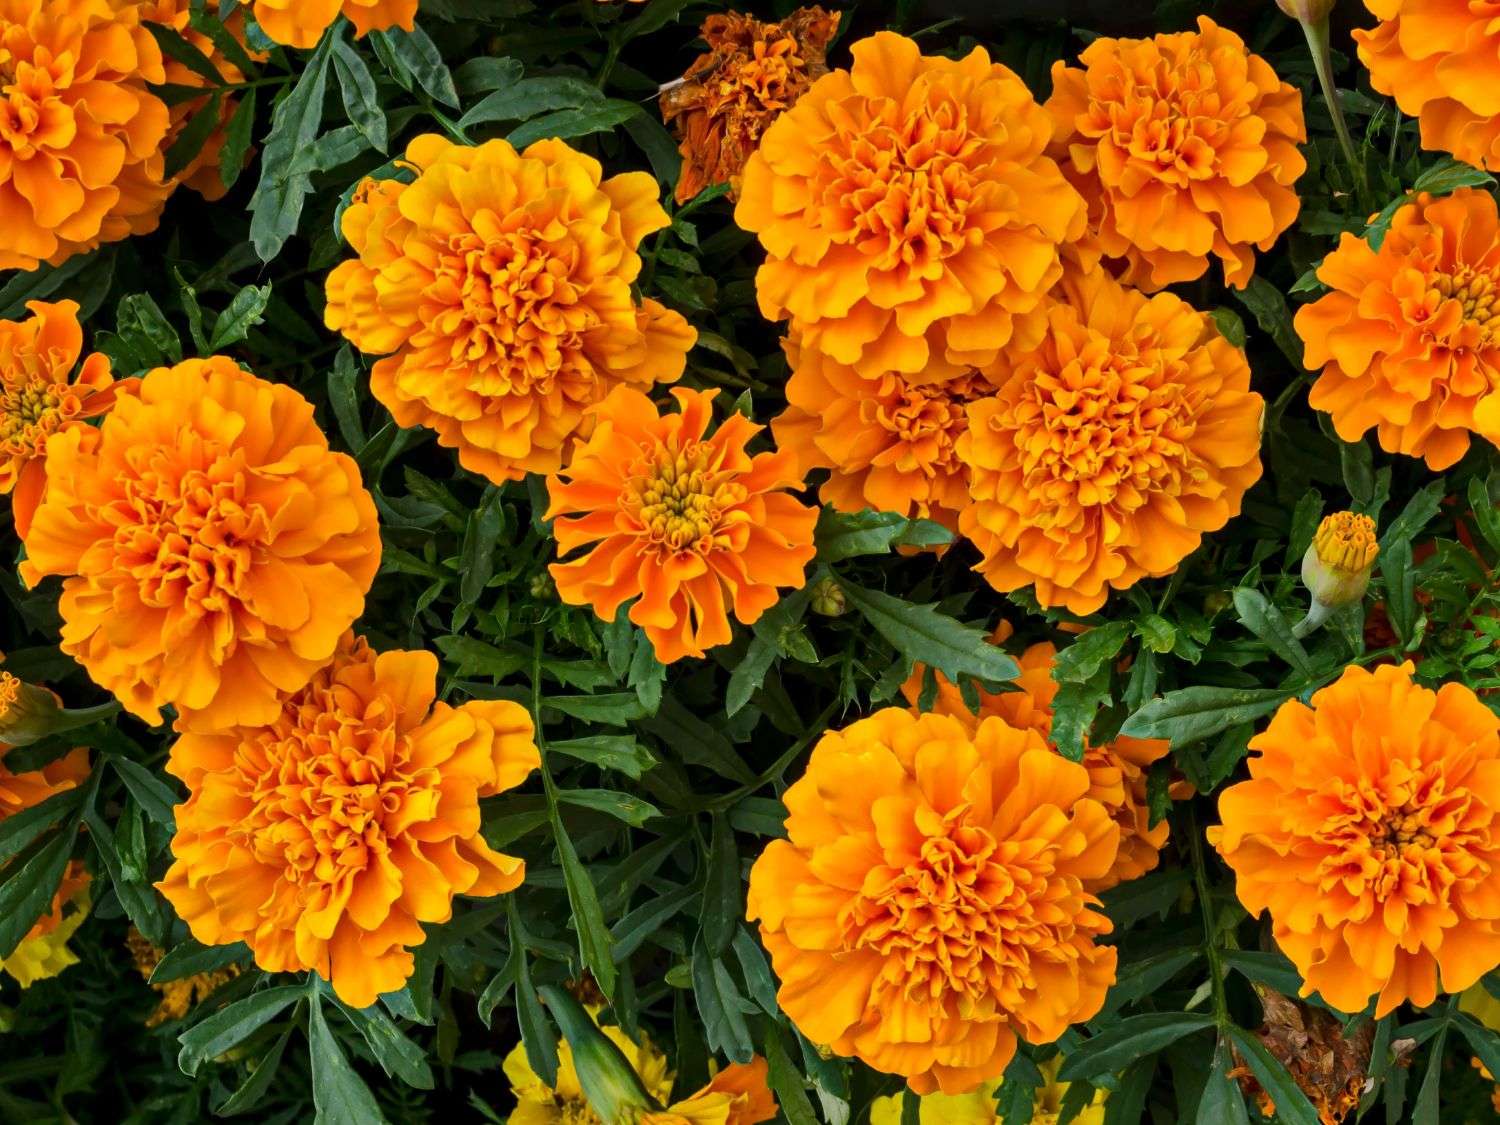 A photo of orange marigolds in a garden